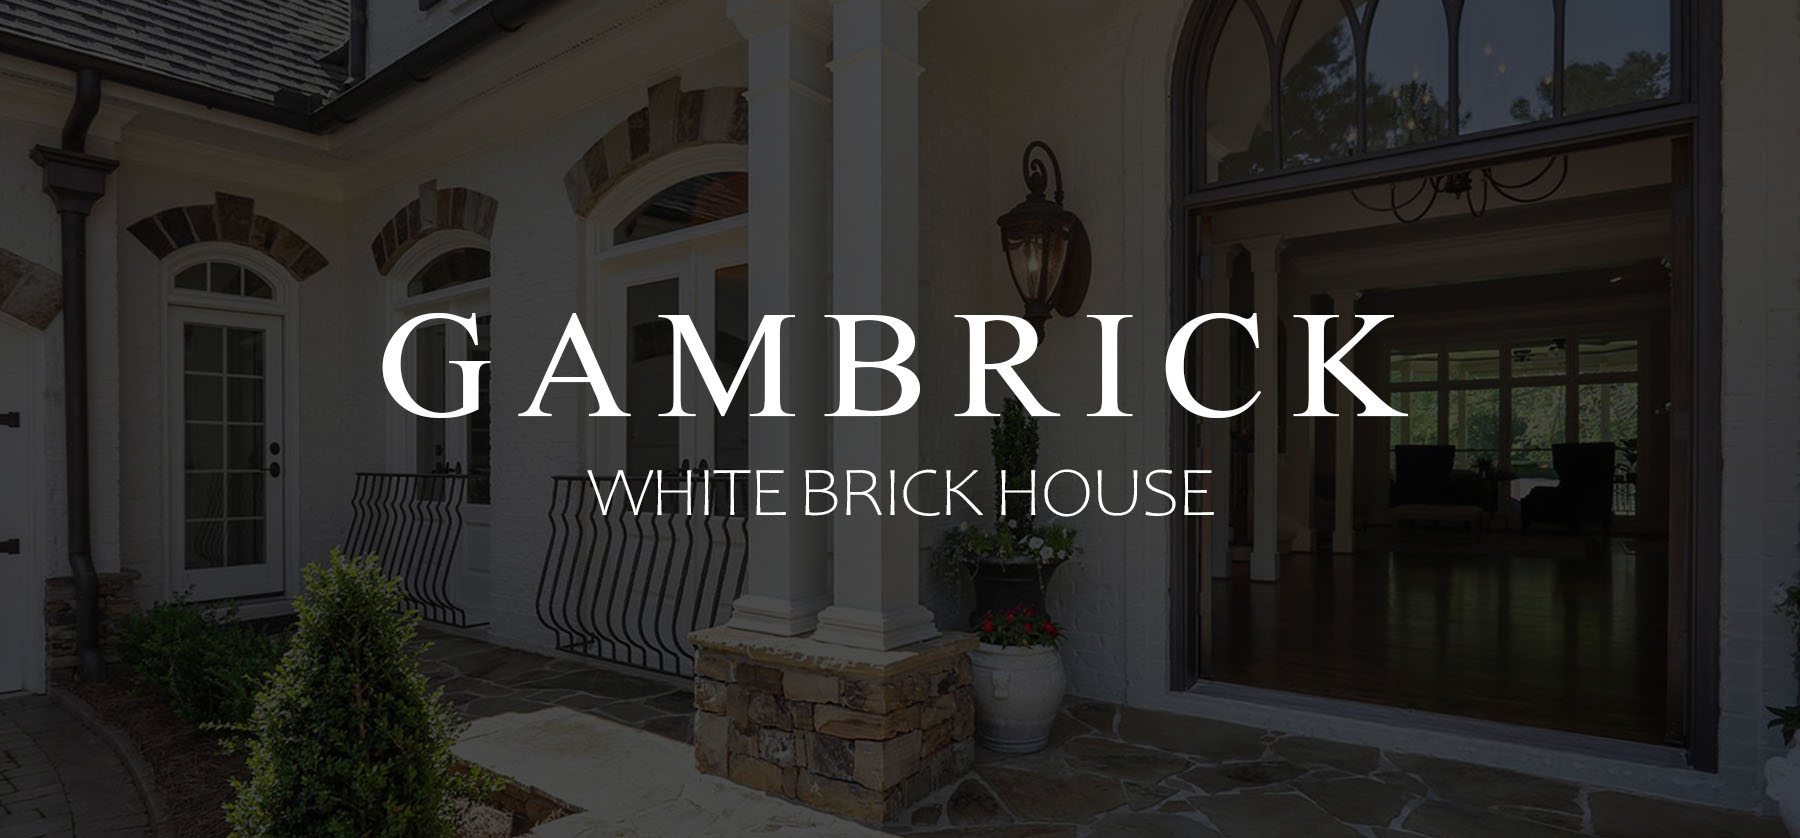 White brick house banner pic